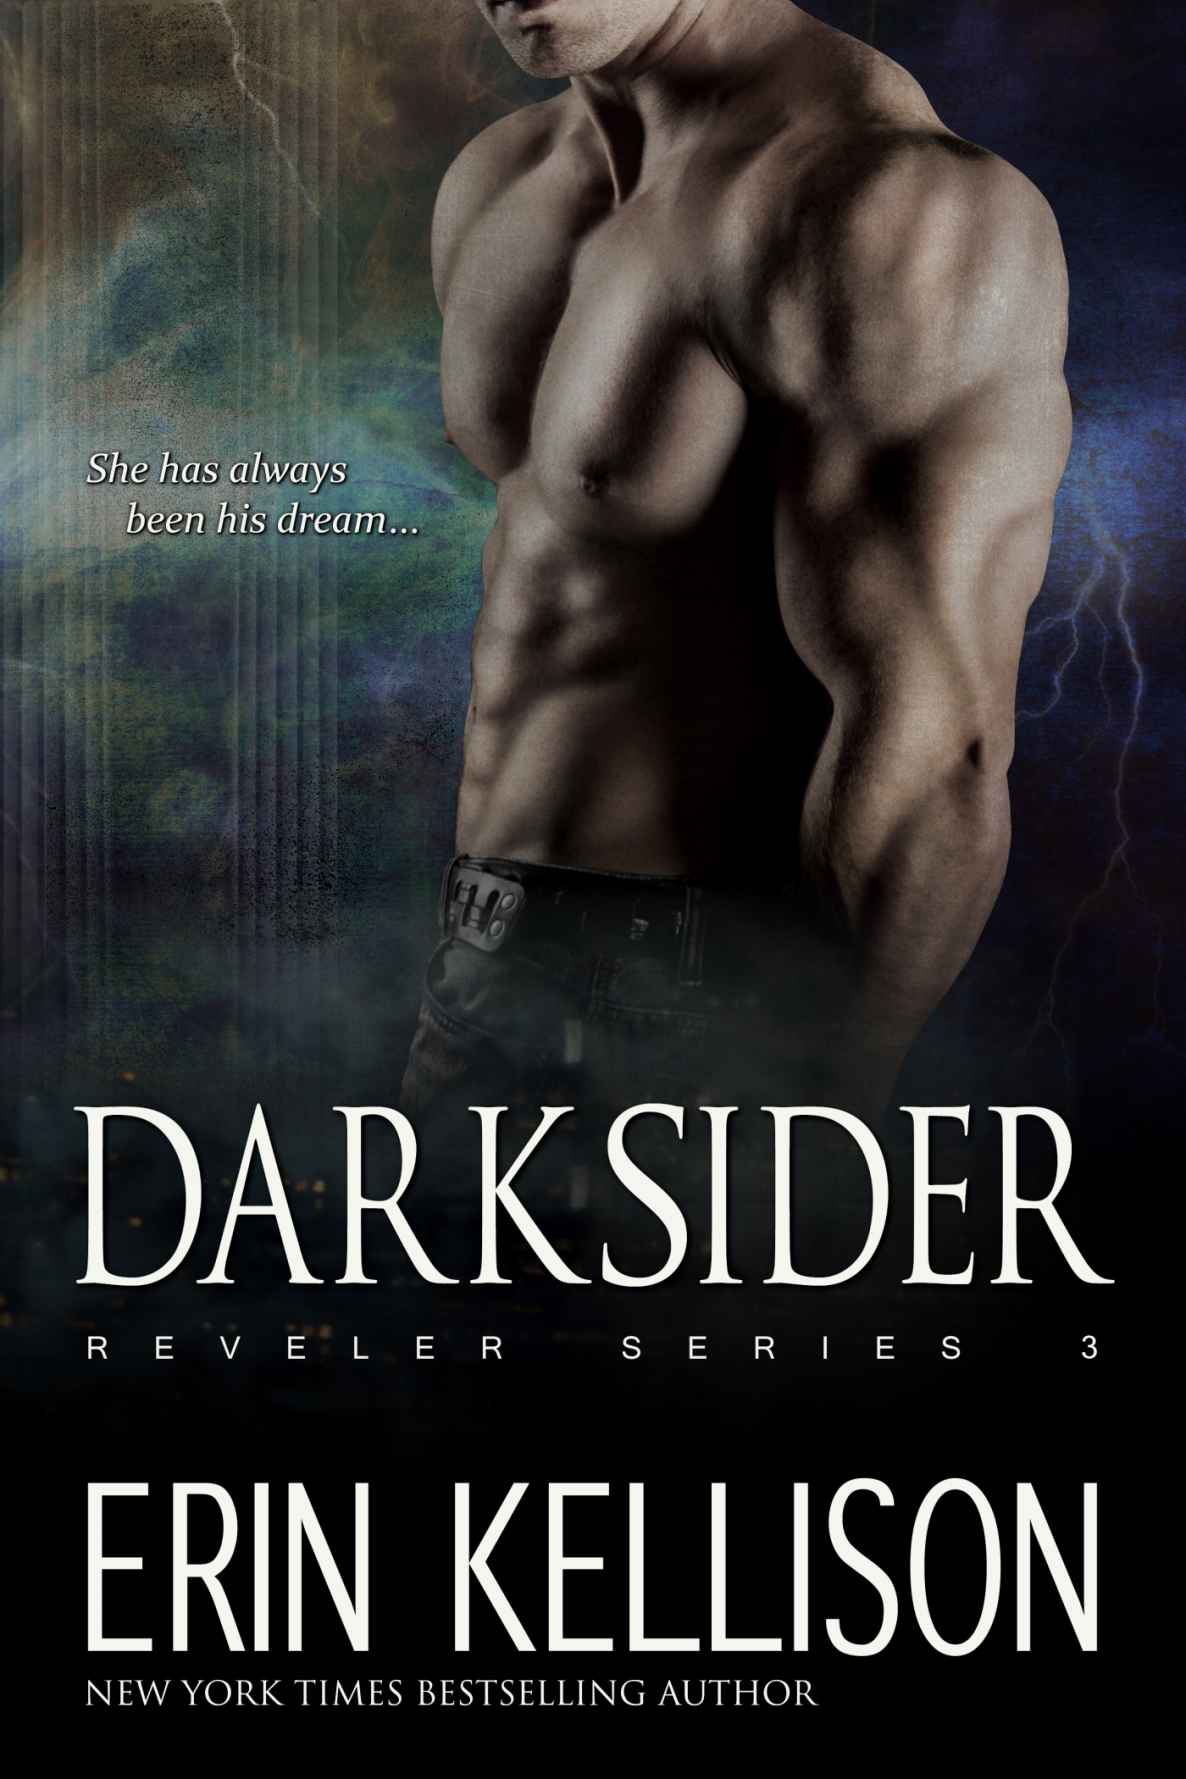 Darksider: Reveler Series 3 by Erin Kellison